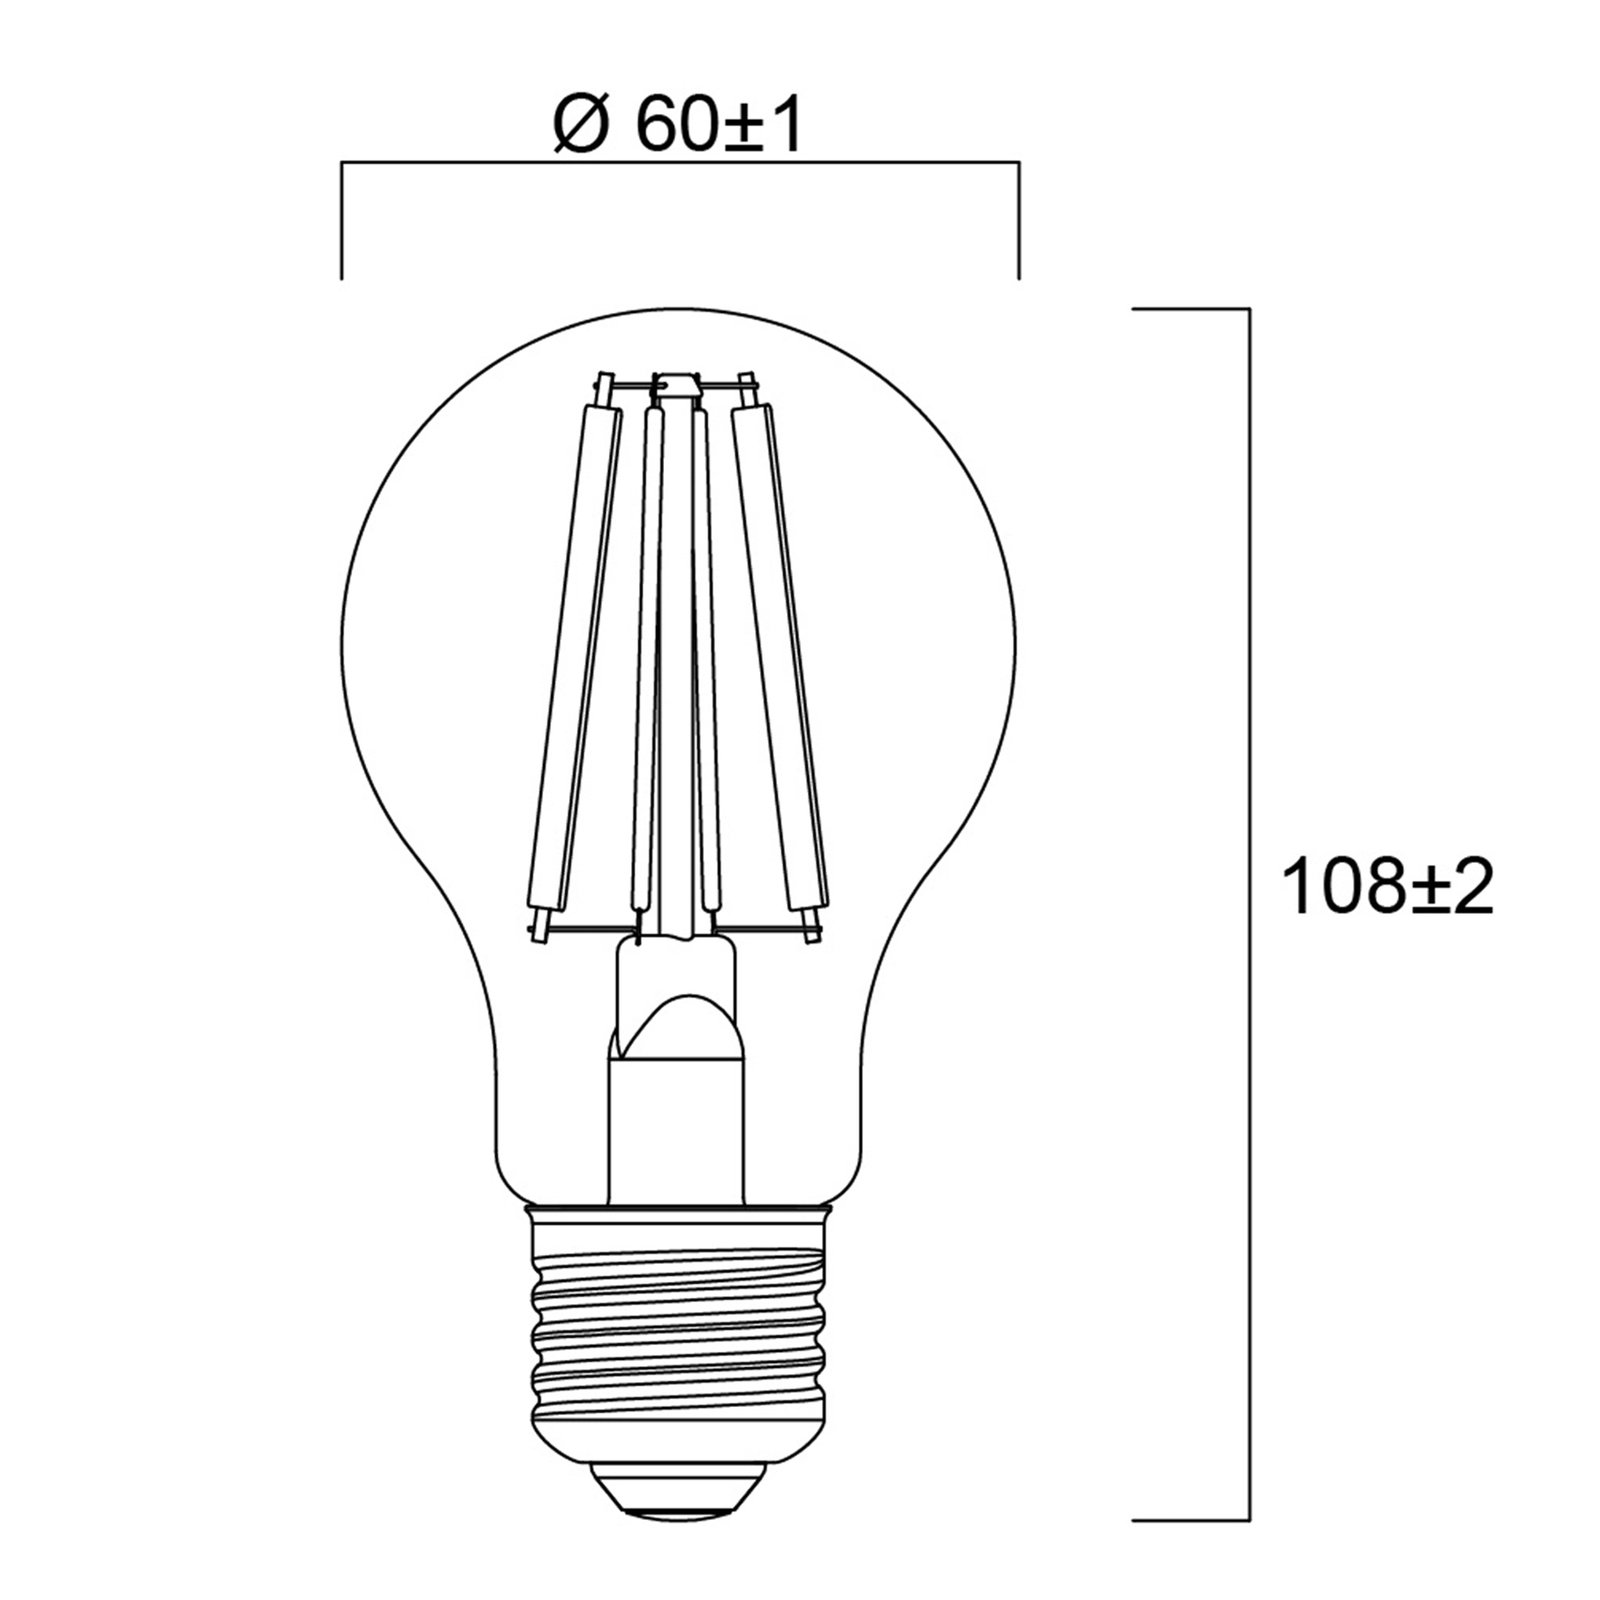 Sylvania E27 filament LED bulb 4W 2,700K 840lm